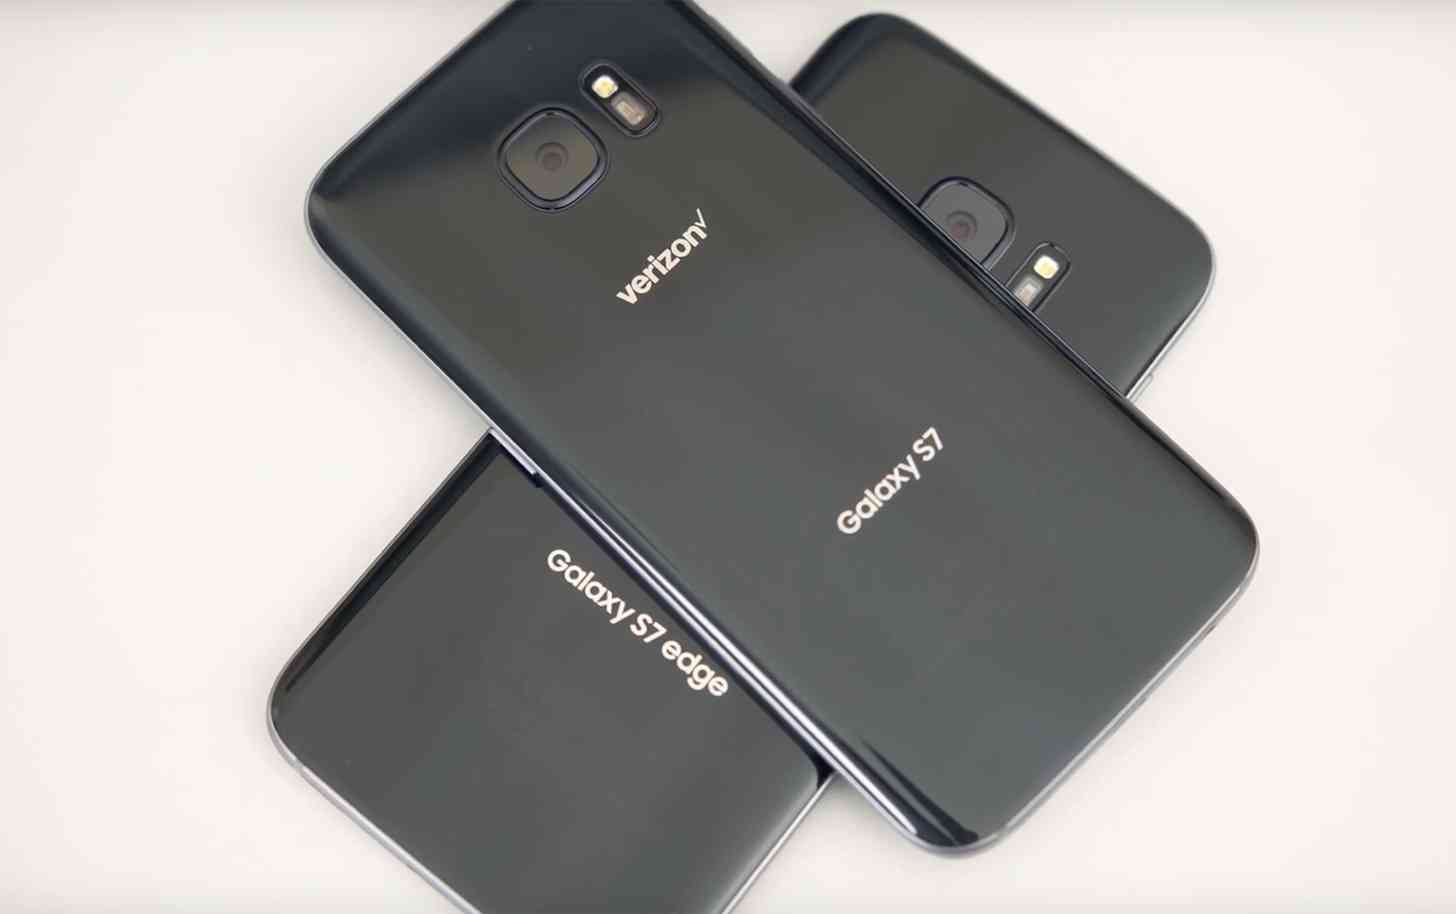 Verizon Galaxy S7, S7 edge hands-on